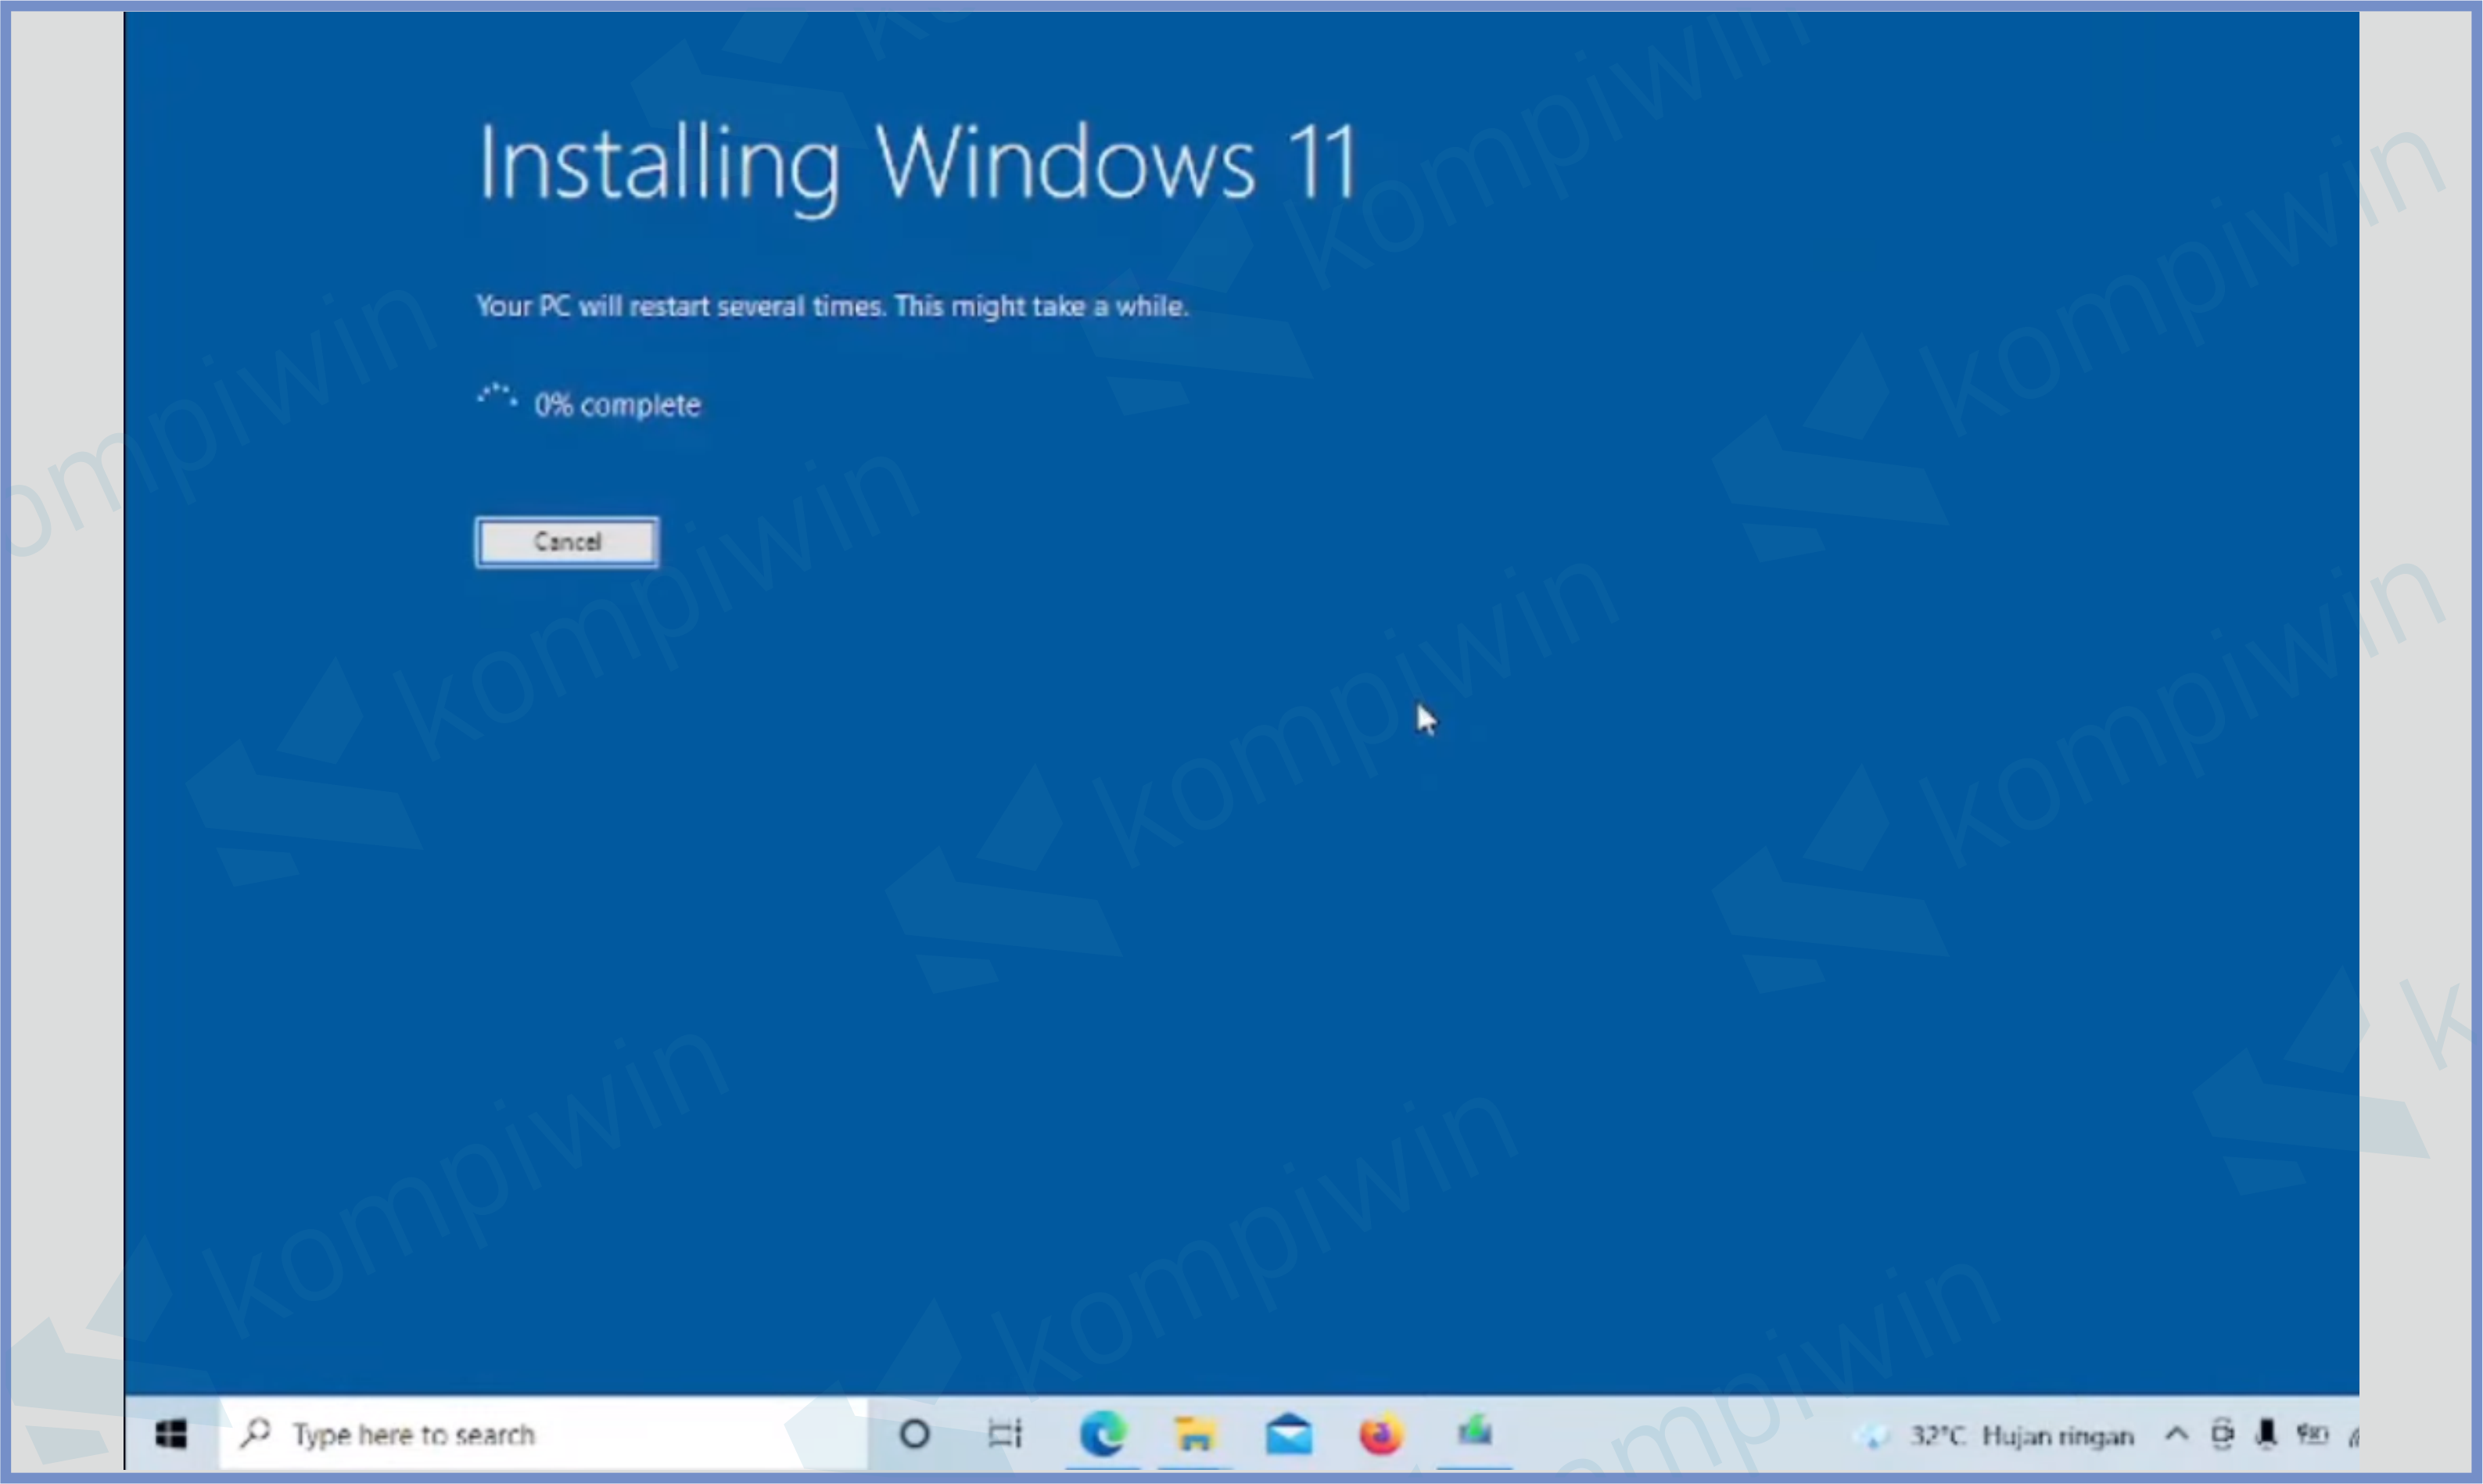 Tunggu Inastalling Windows 11